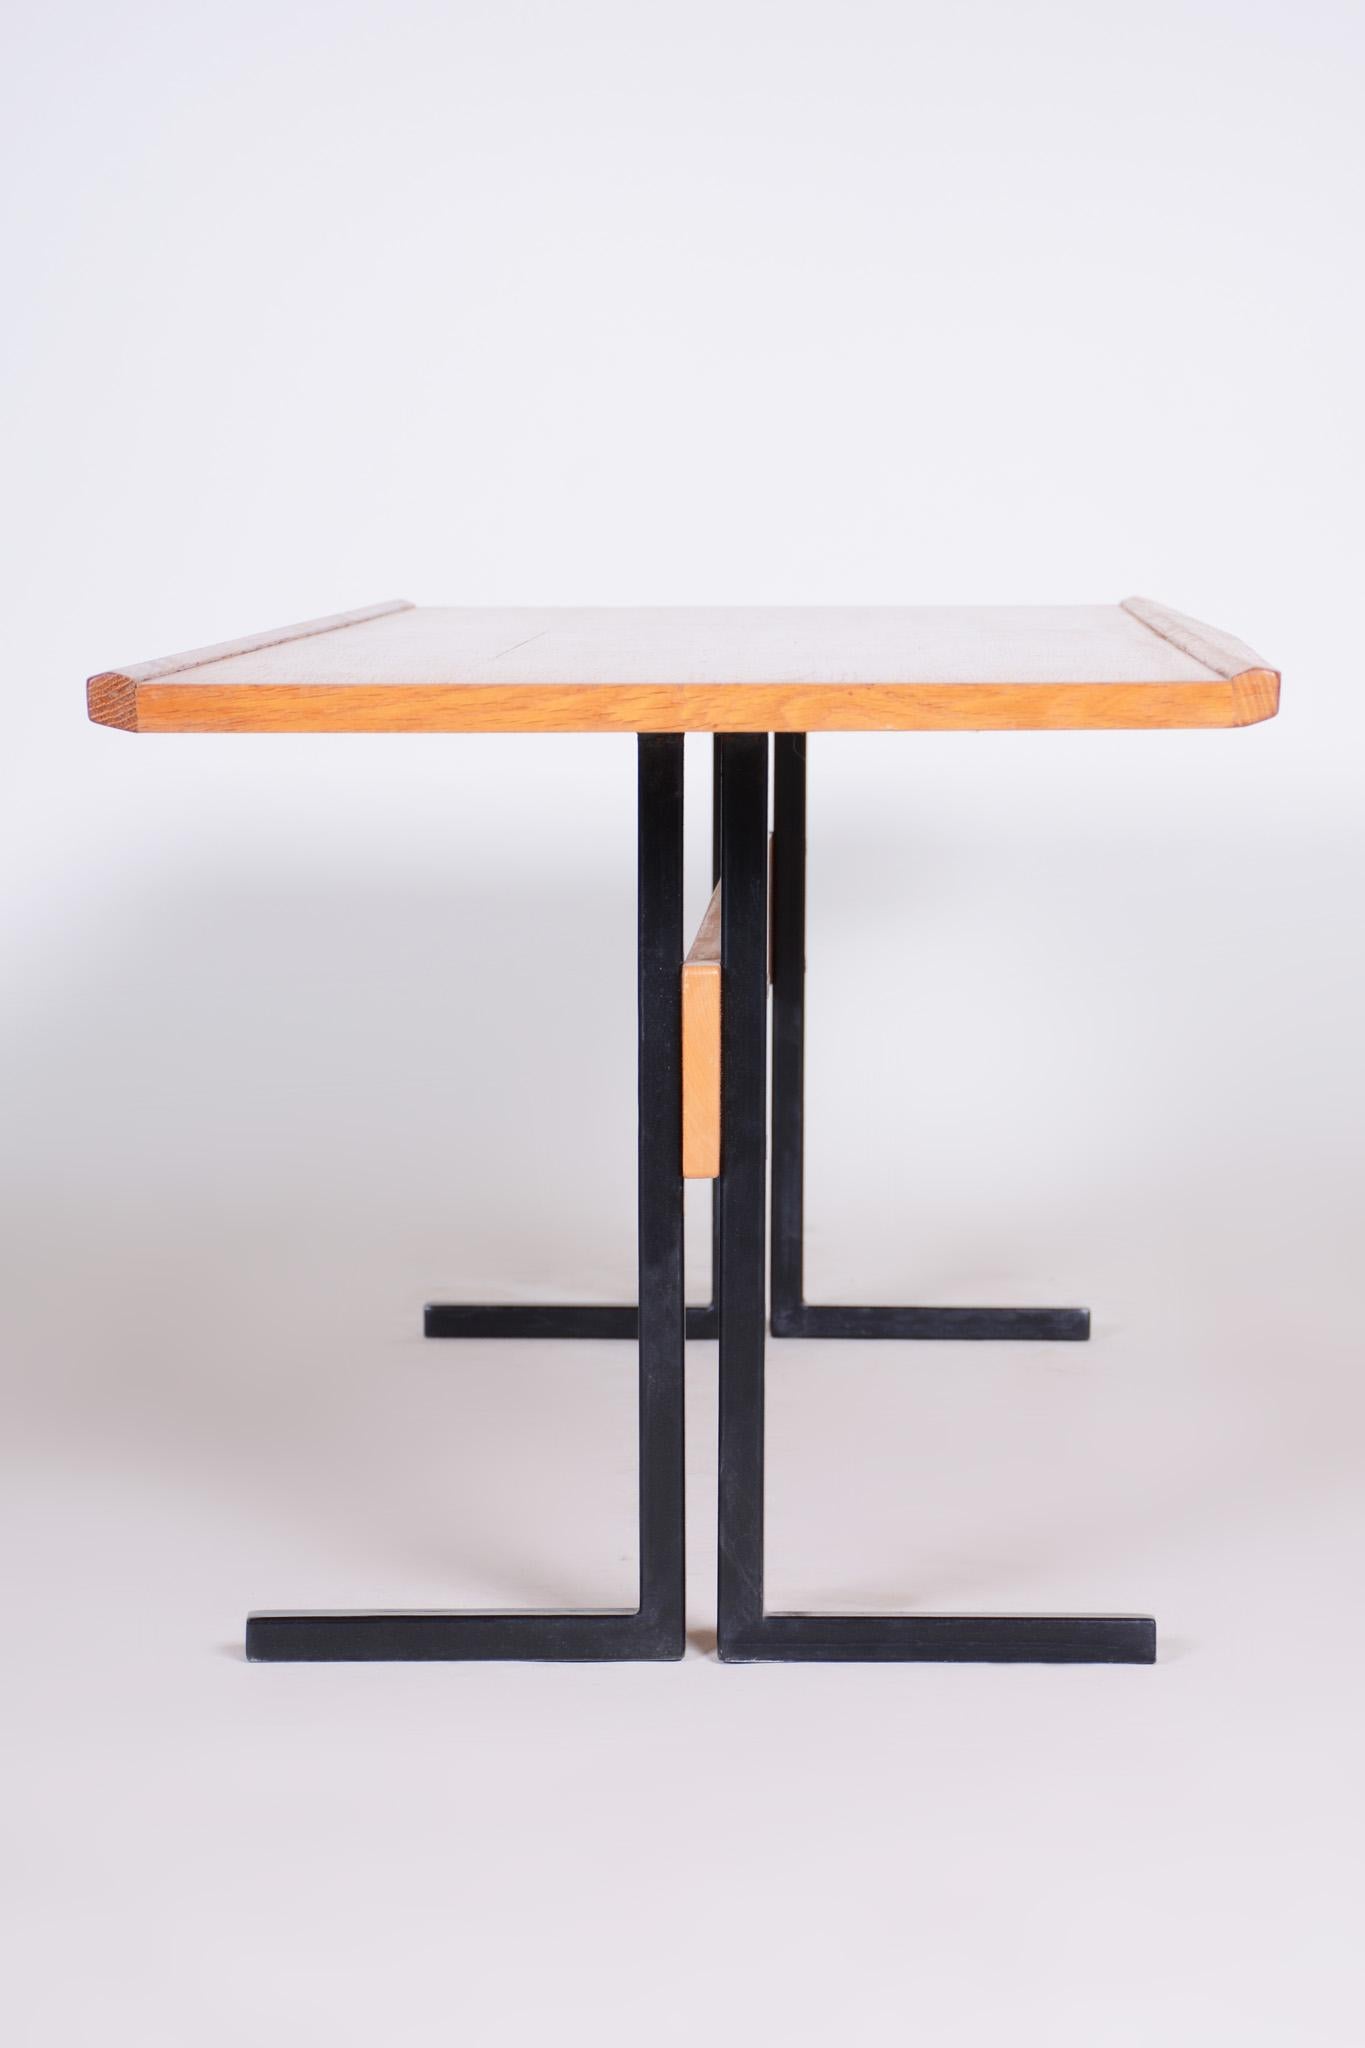 Original Rectangular Ash and Steel Table, Czech Mid-Century Modern, 1960s For Sale 5